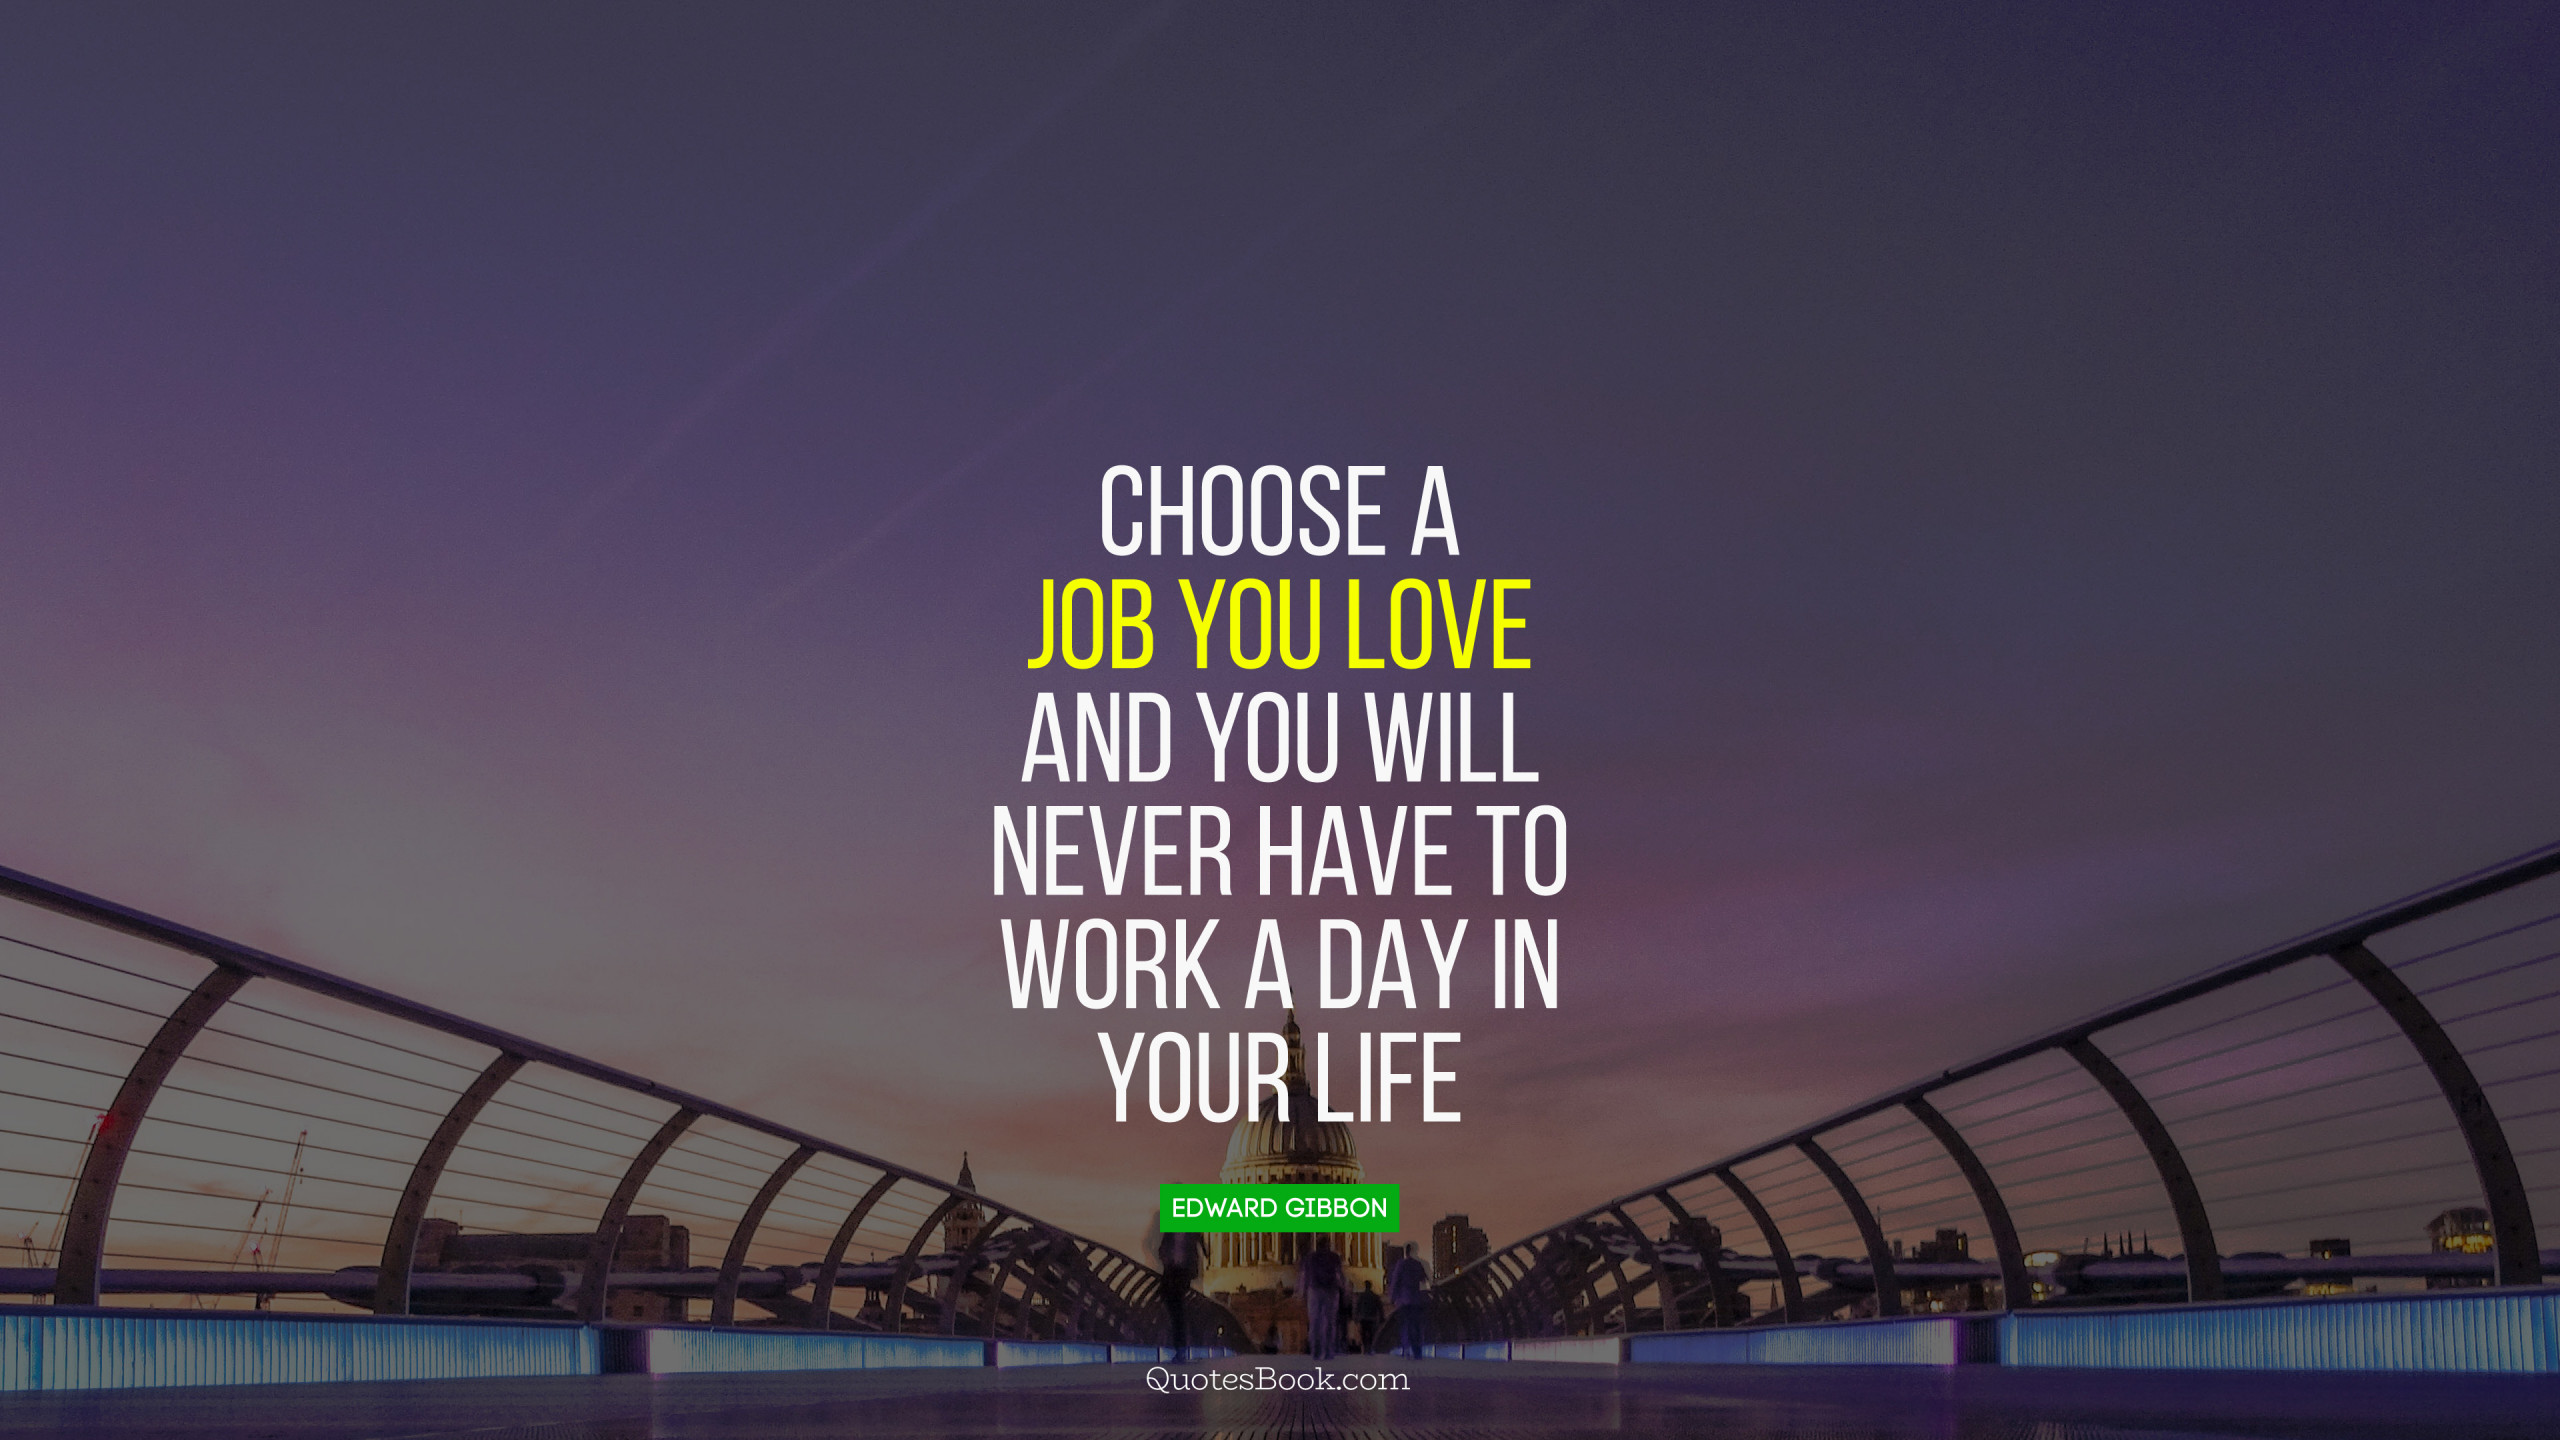 You can choose life. Choose a job you Love. Choose a job you Love, and you will never have to work a Day in your Life. Day in your Life. Choose the job you like and you will never work a Day.